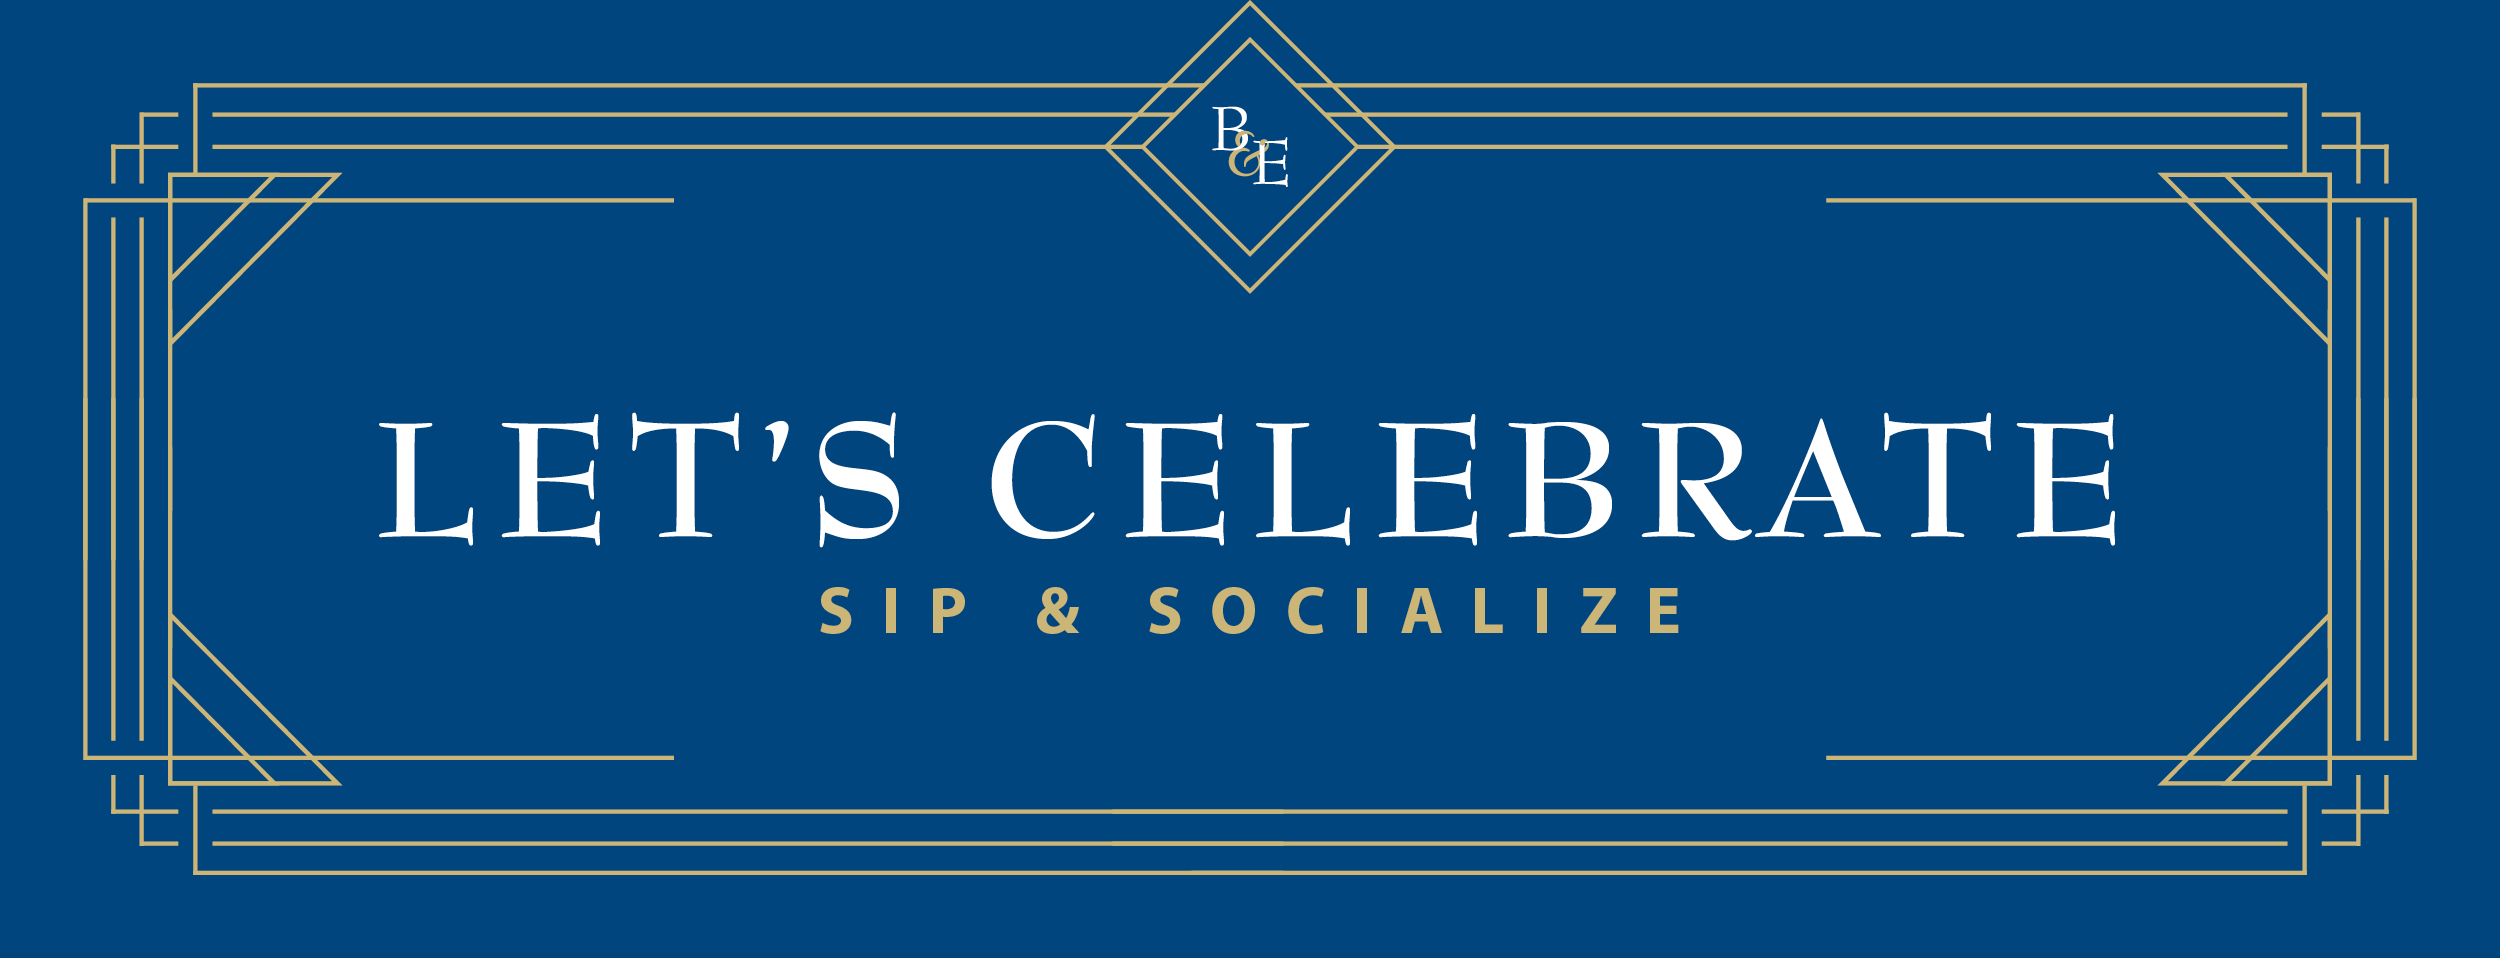 Let's Celebrate Sip & Socialize